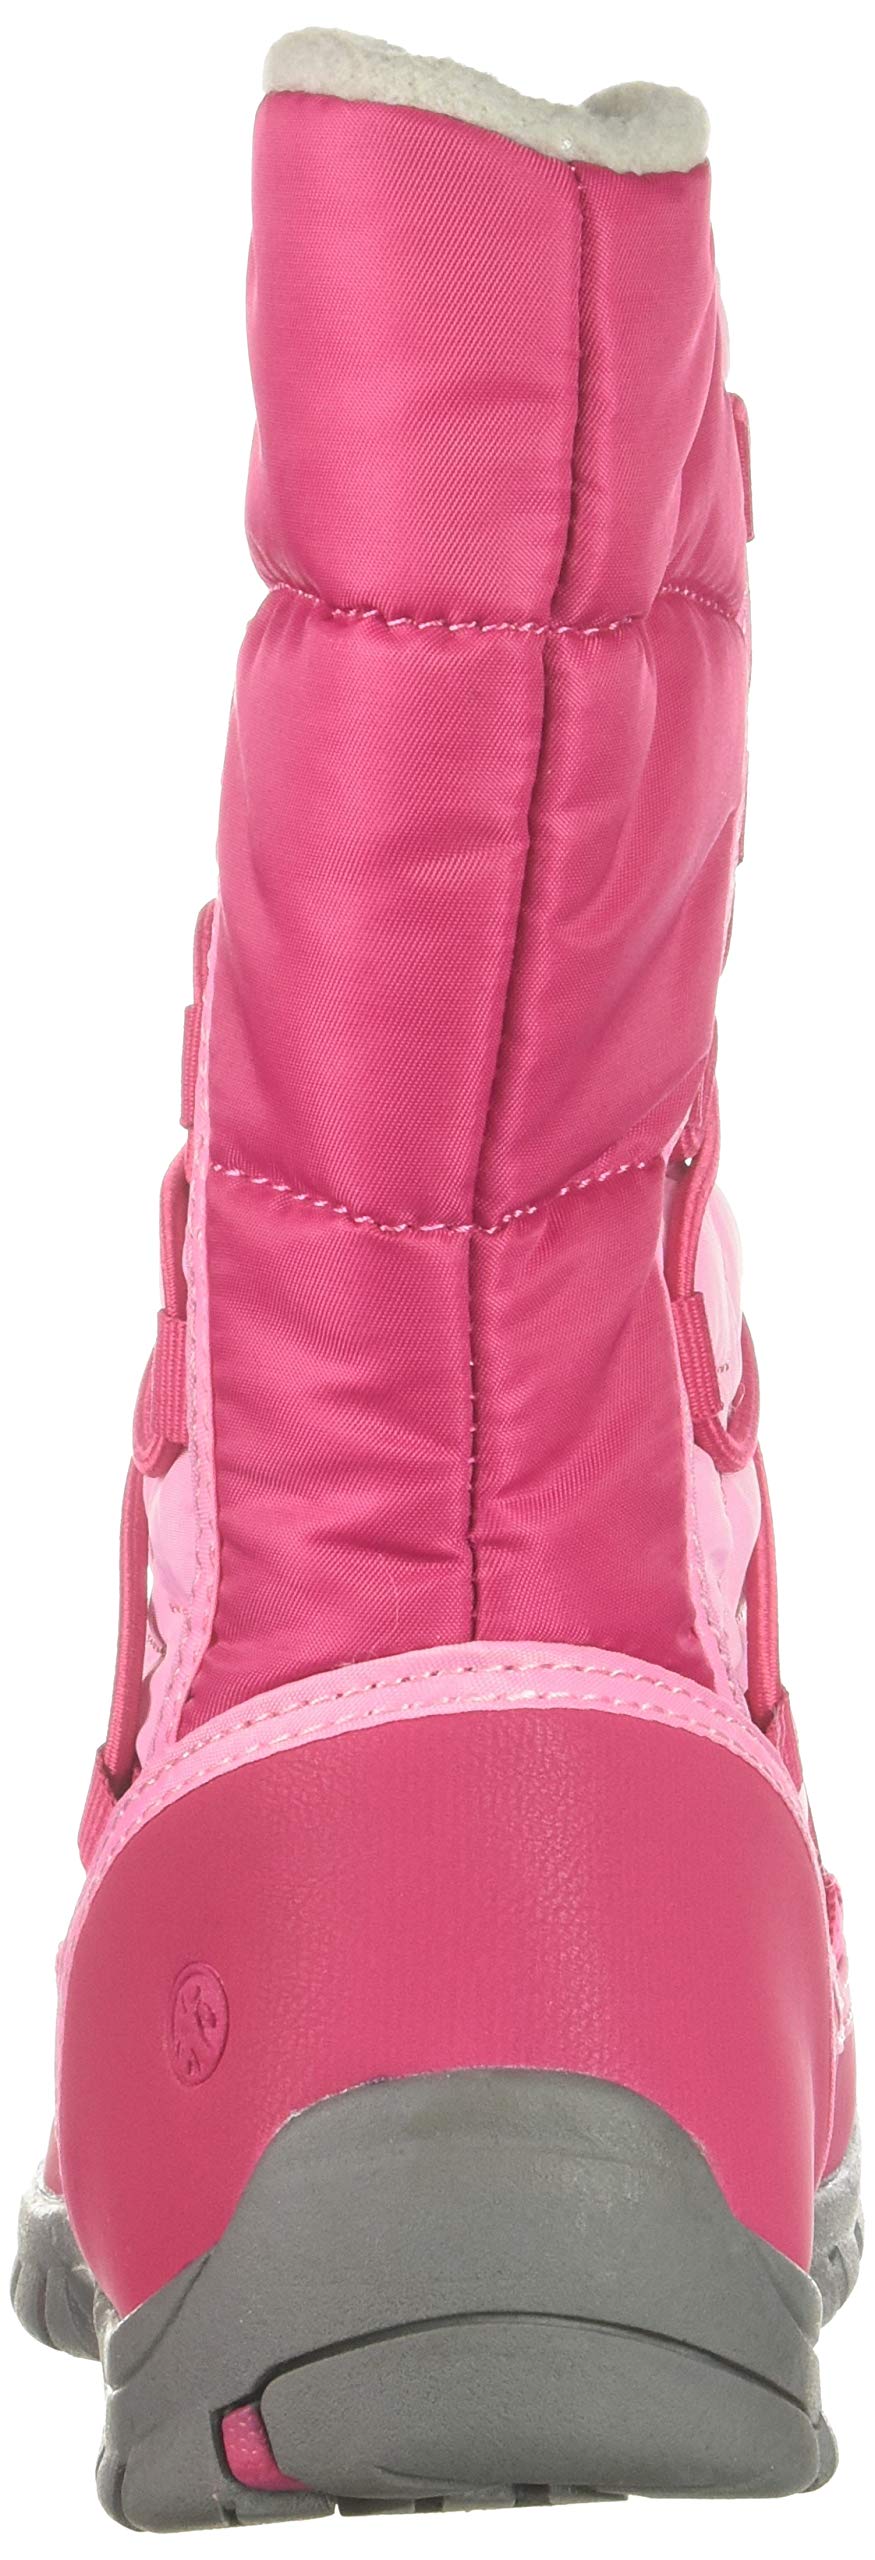 Northside Girls' Starling Snow Boot, Fuchsia/Pink